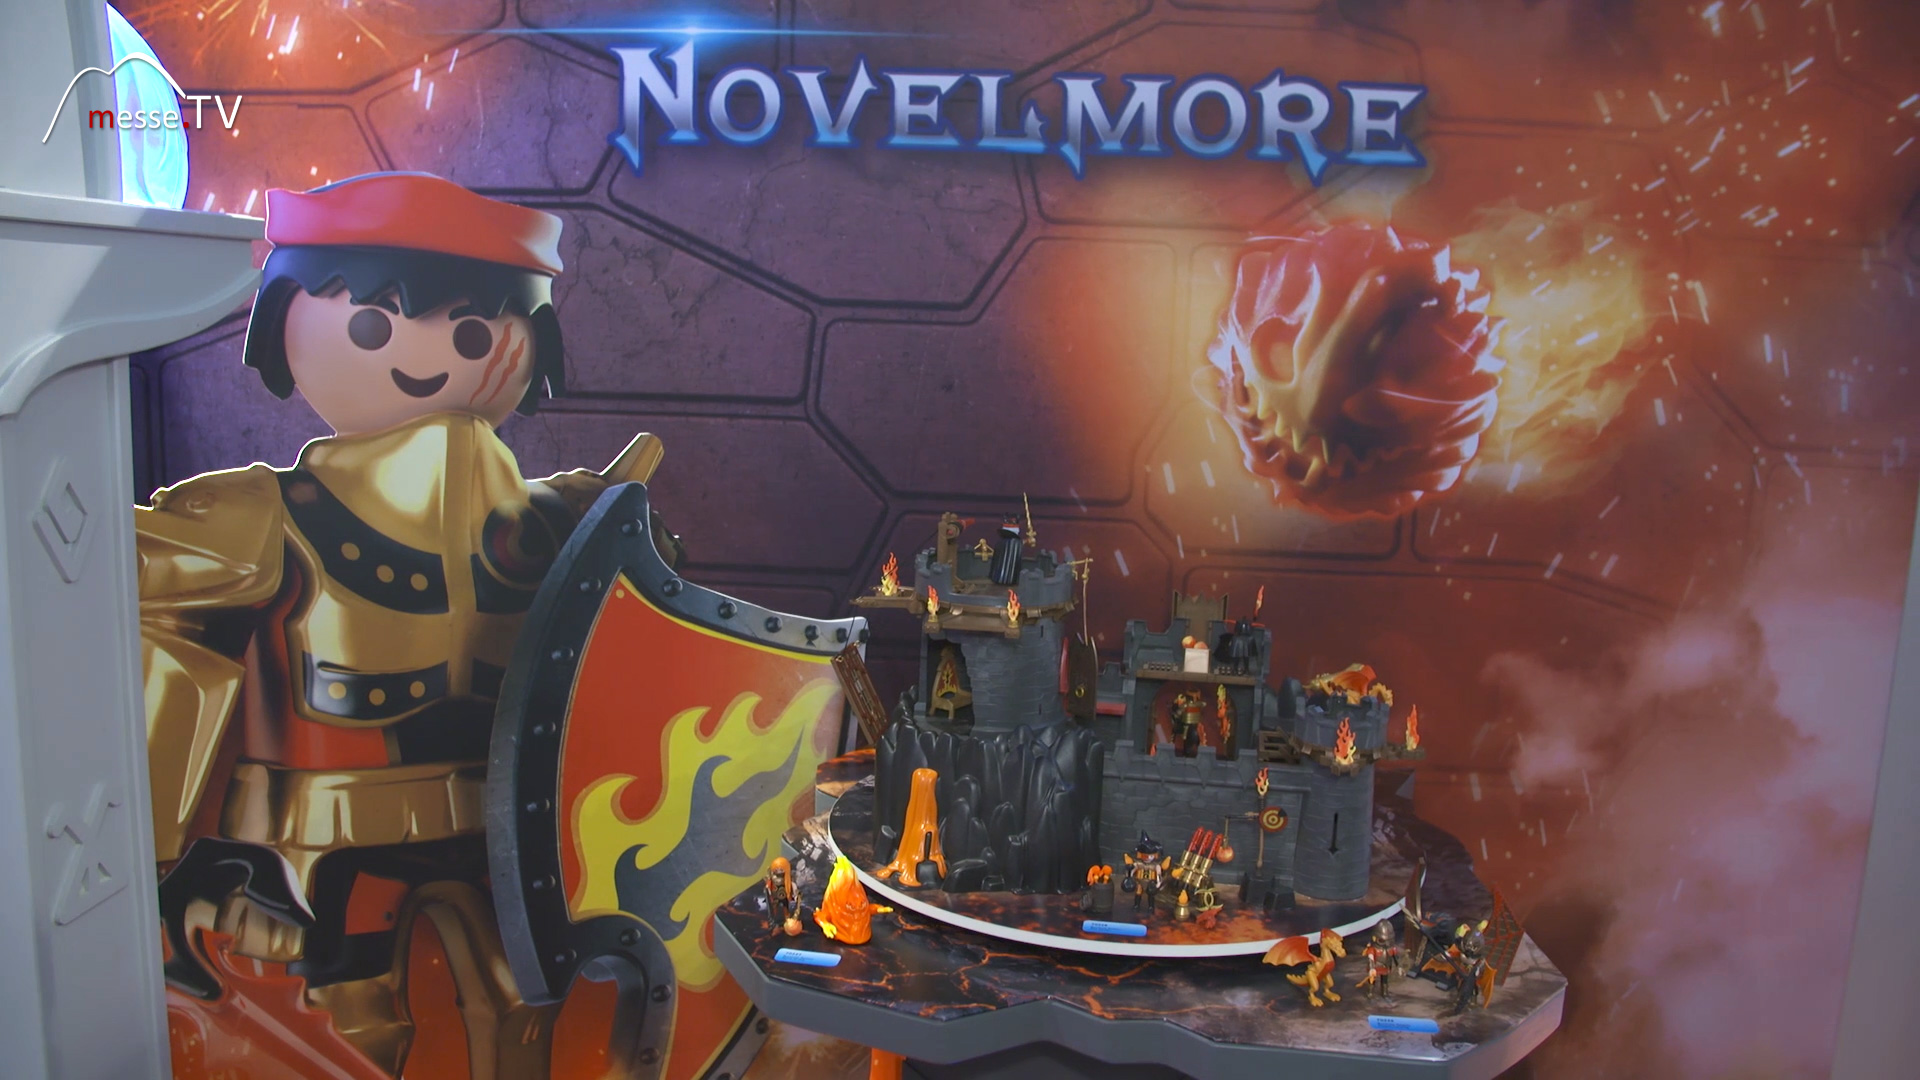 Novelmore Ritter Spielewelt Playmobil Spielwarenmesse 2020